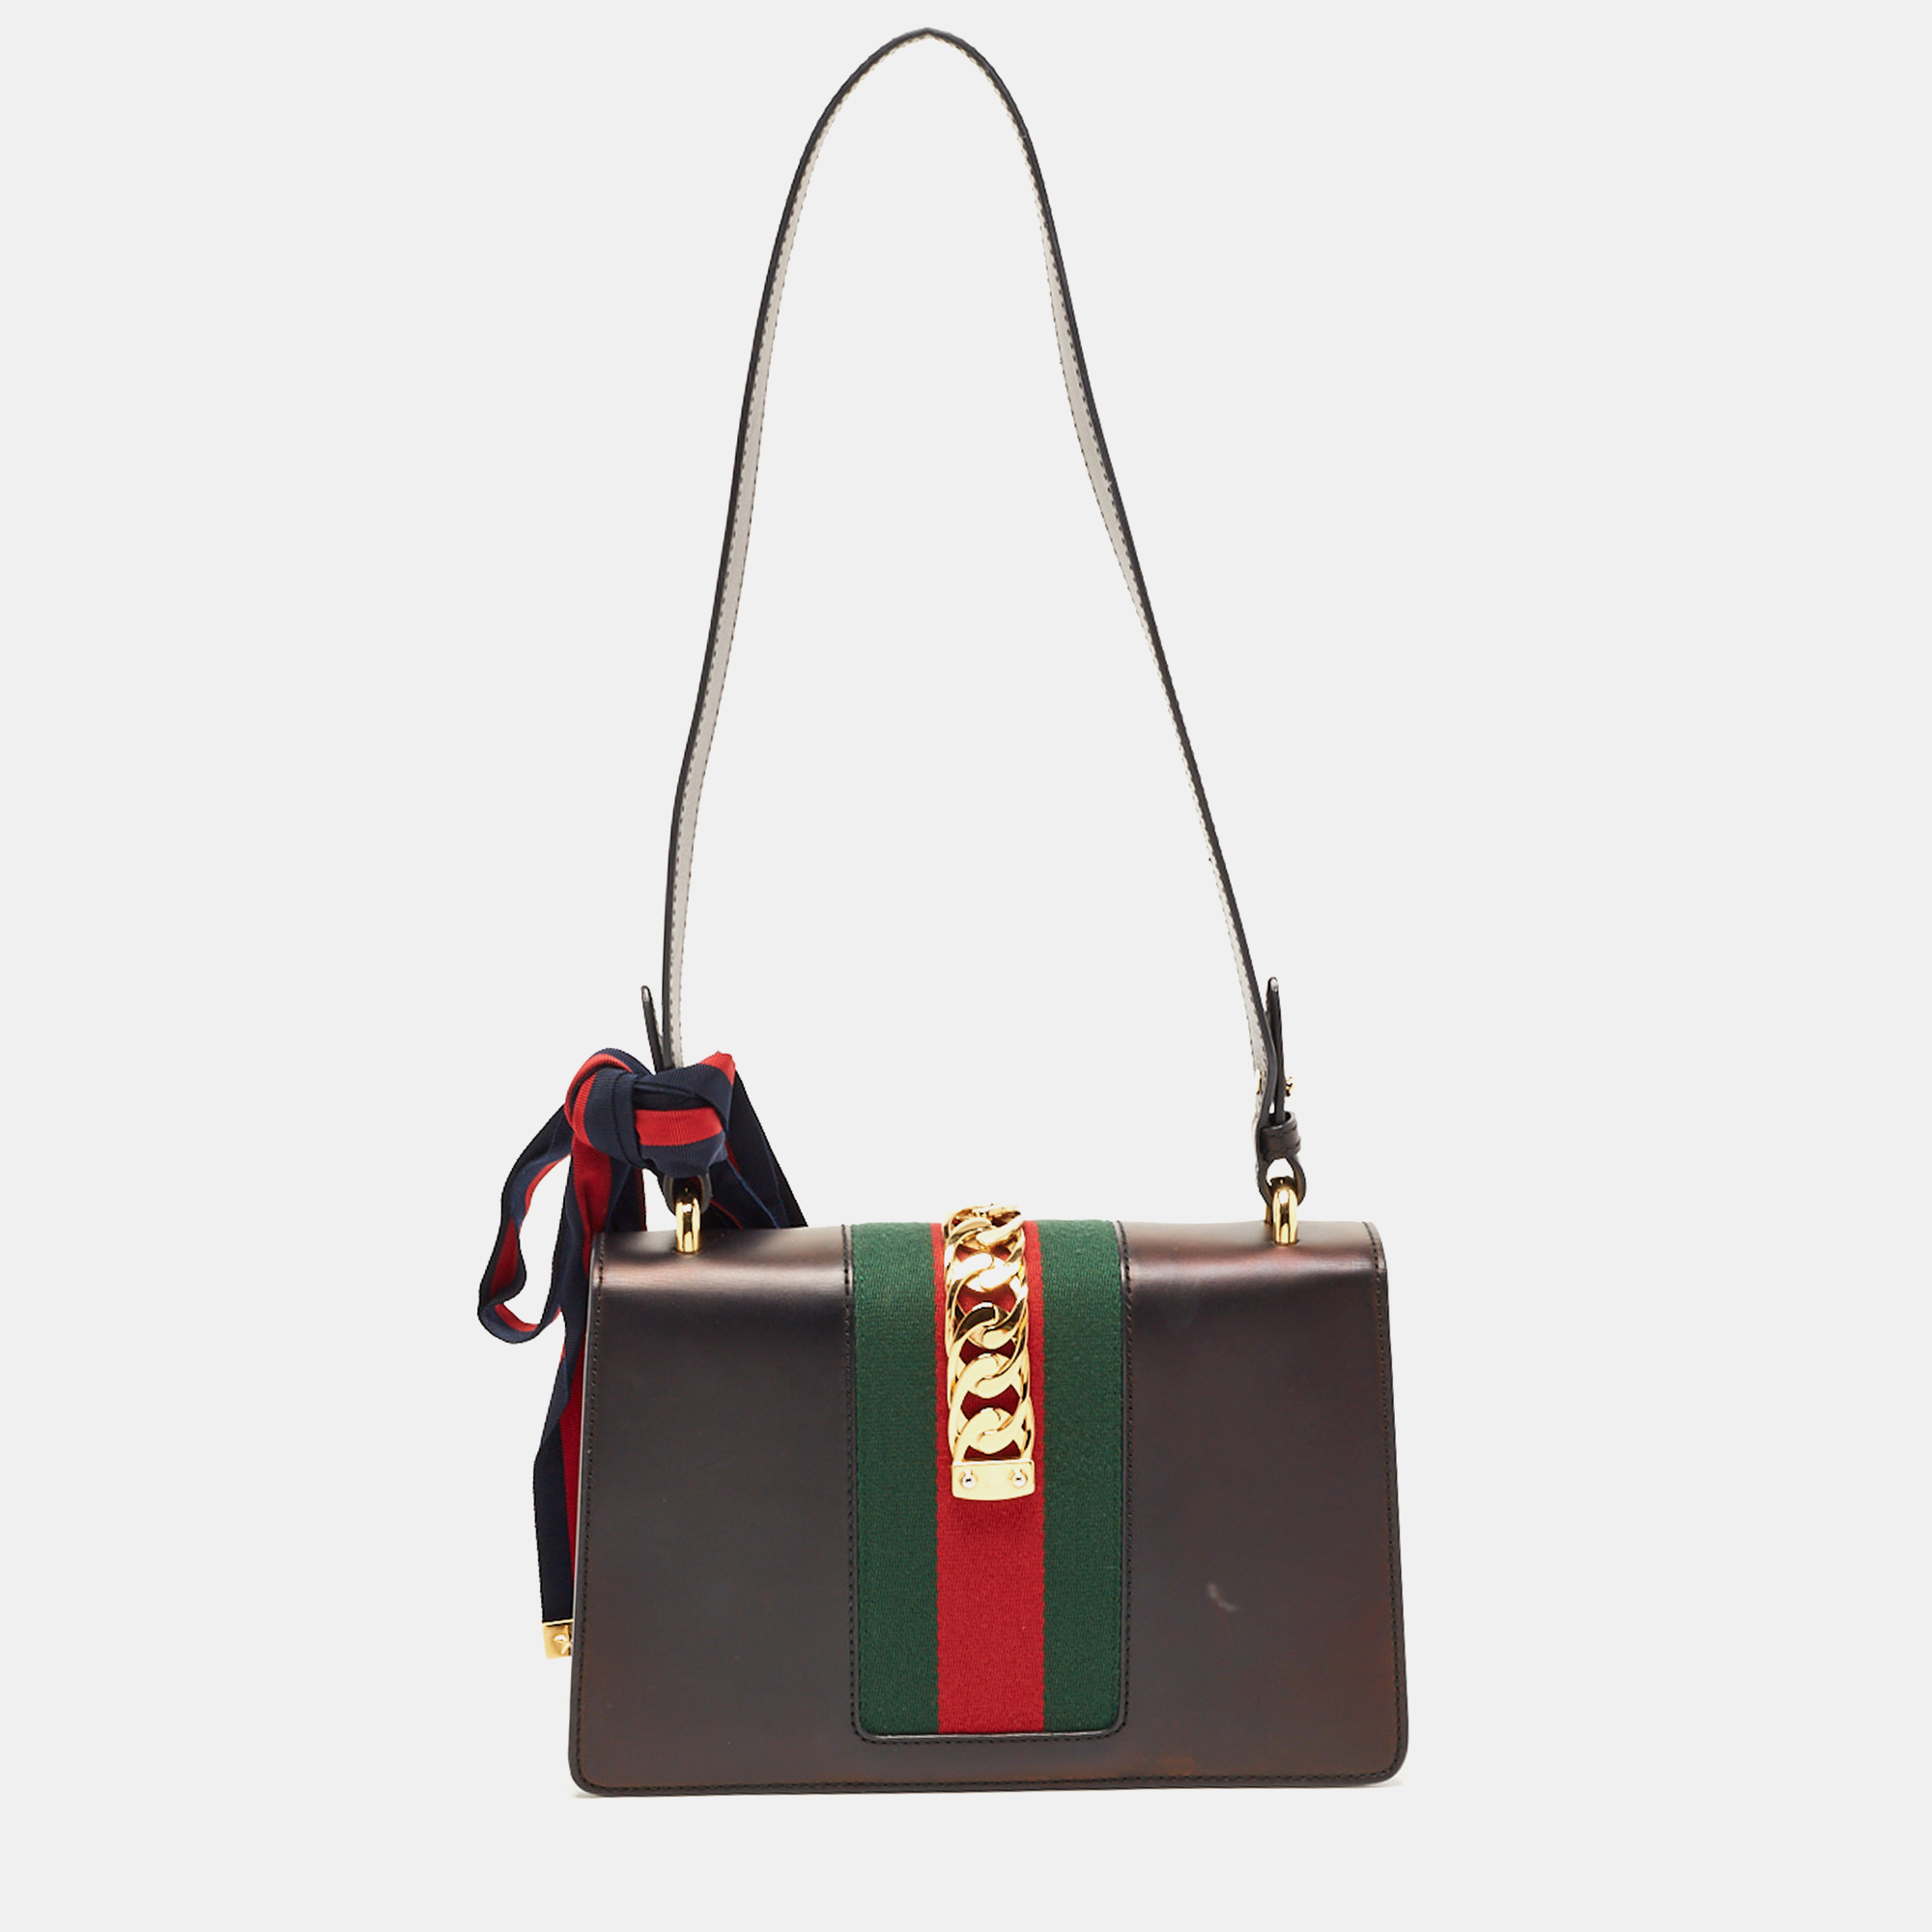 Gucci Black Leather Small Web Sylvie Shoulder Bag